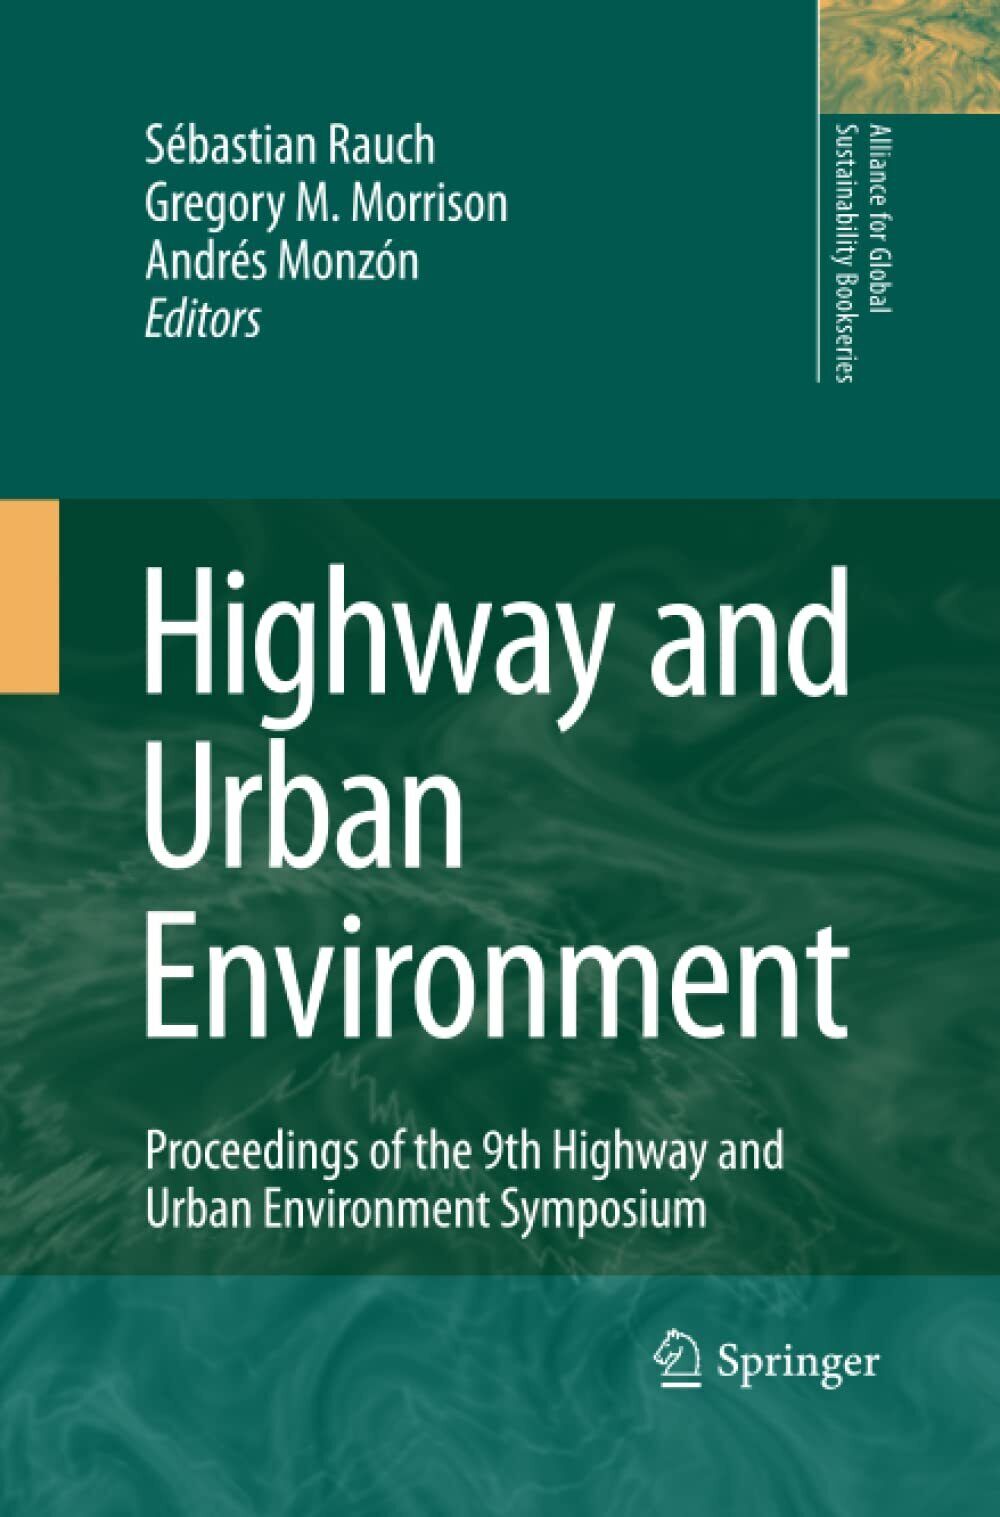 Highway and Urban Environment - S?bastien Rauch - Springer, 2012